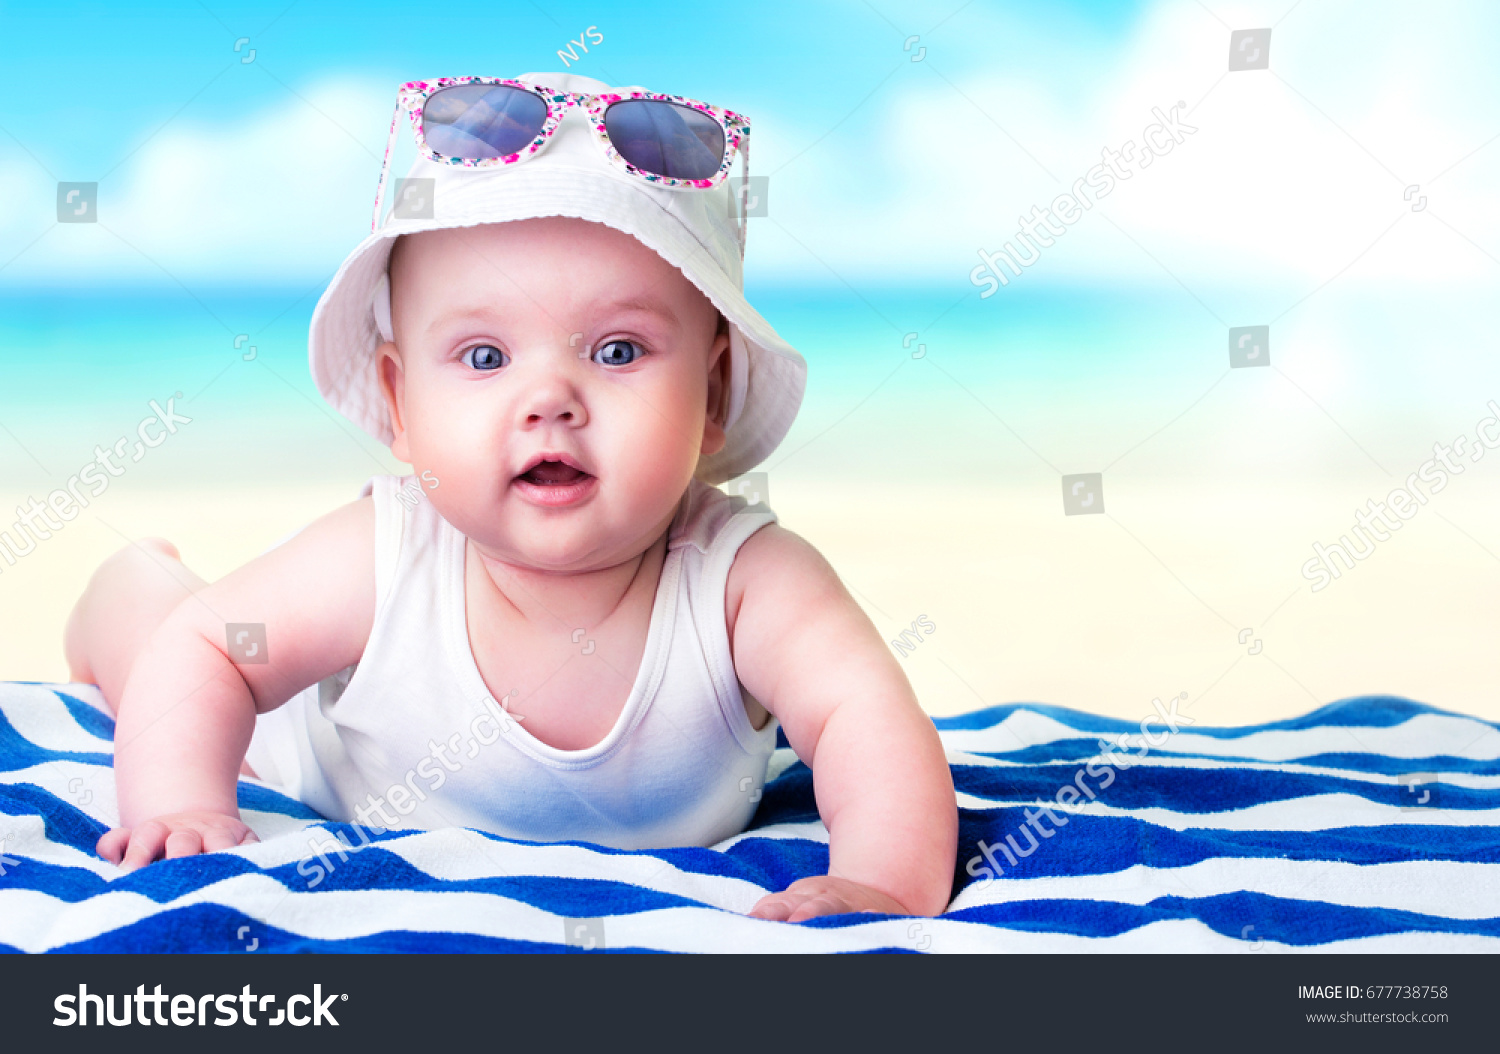 infant beach towel